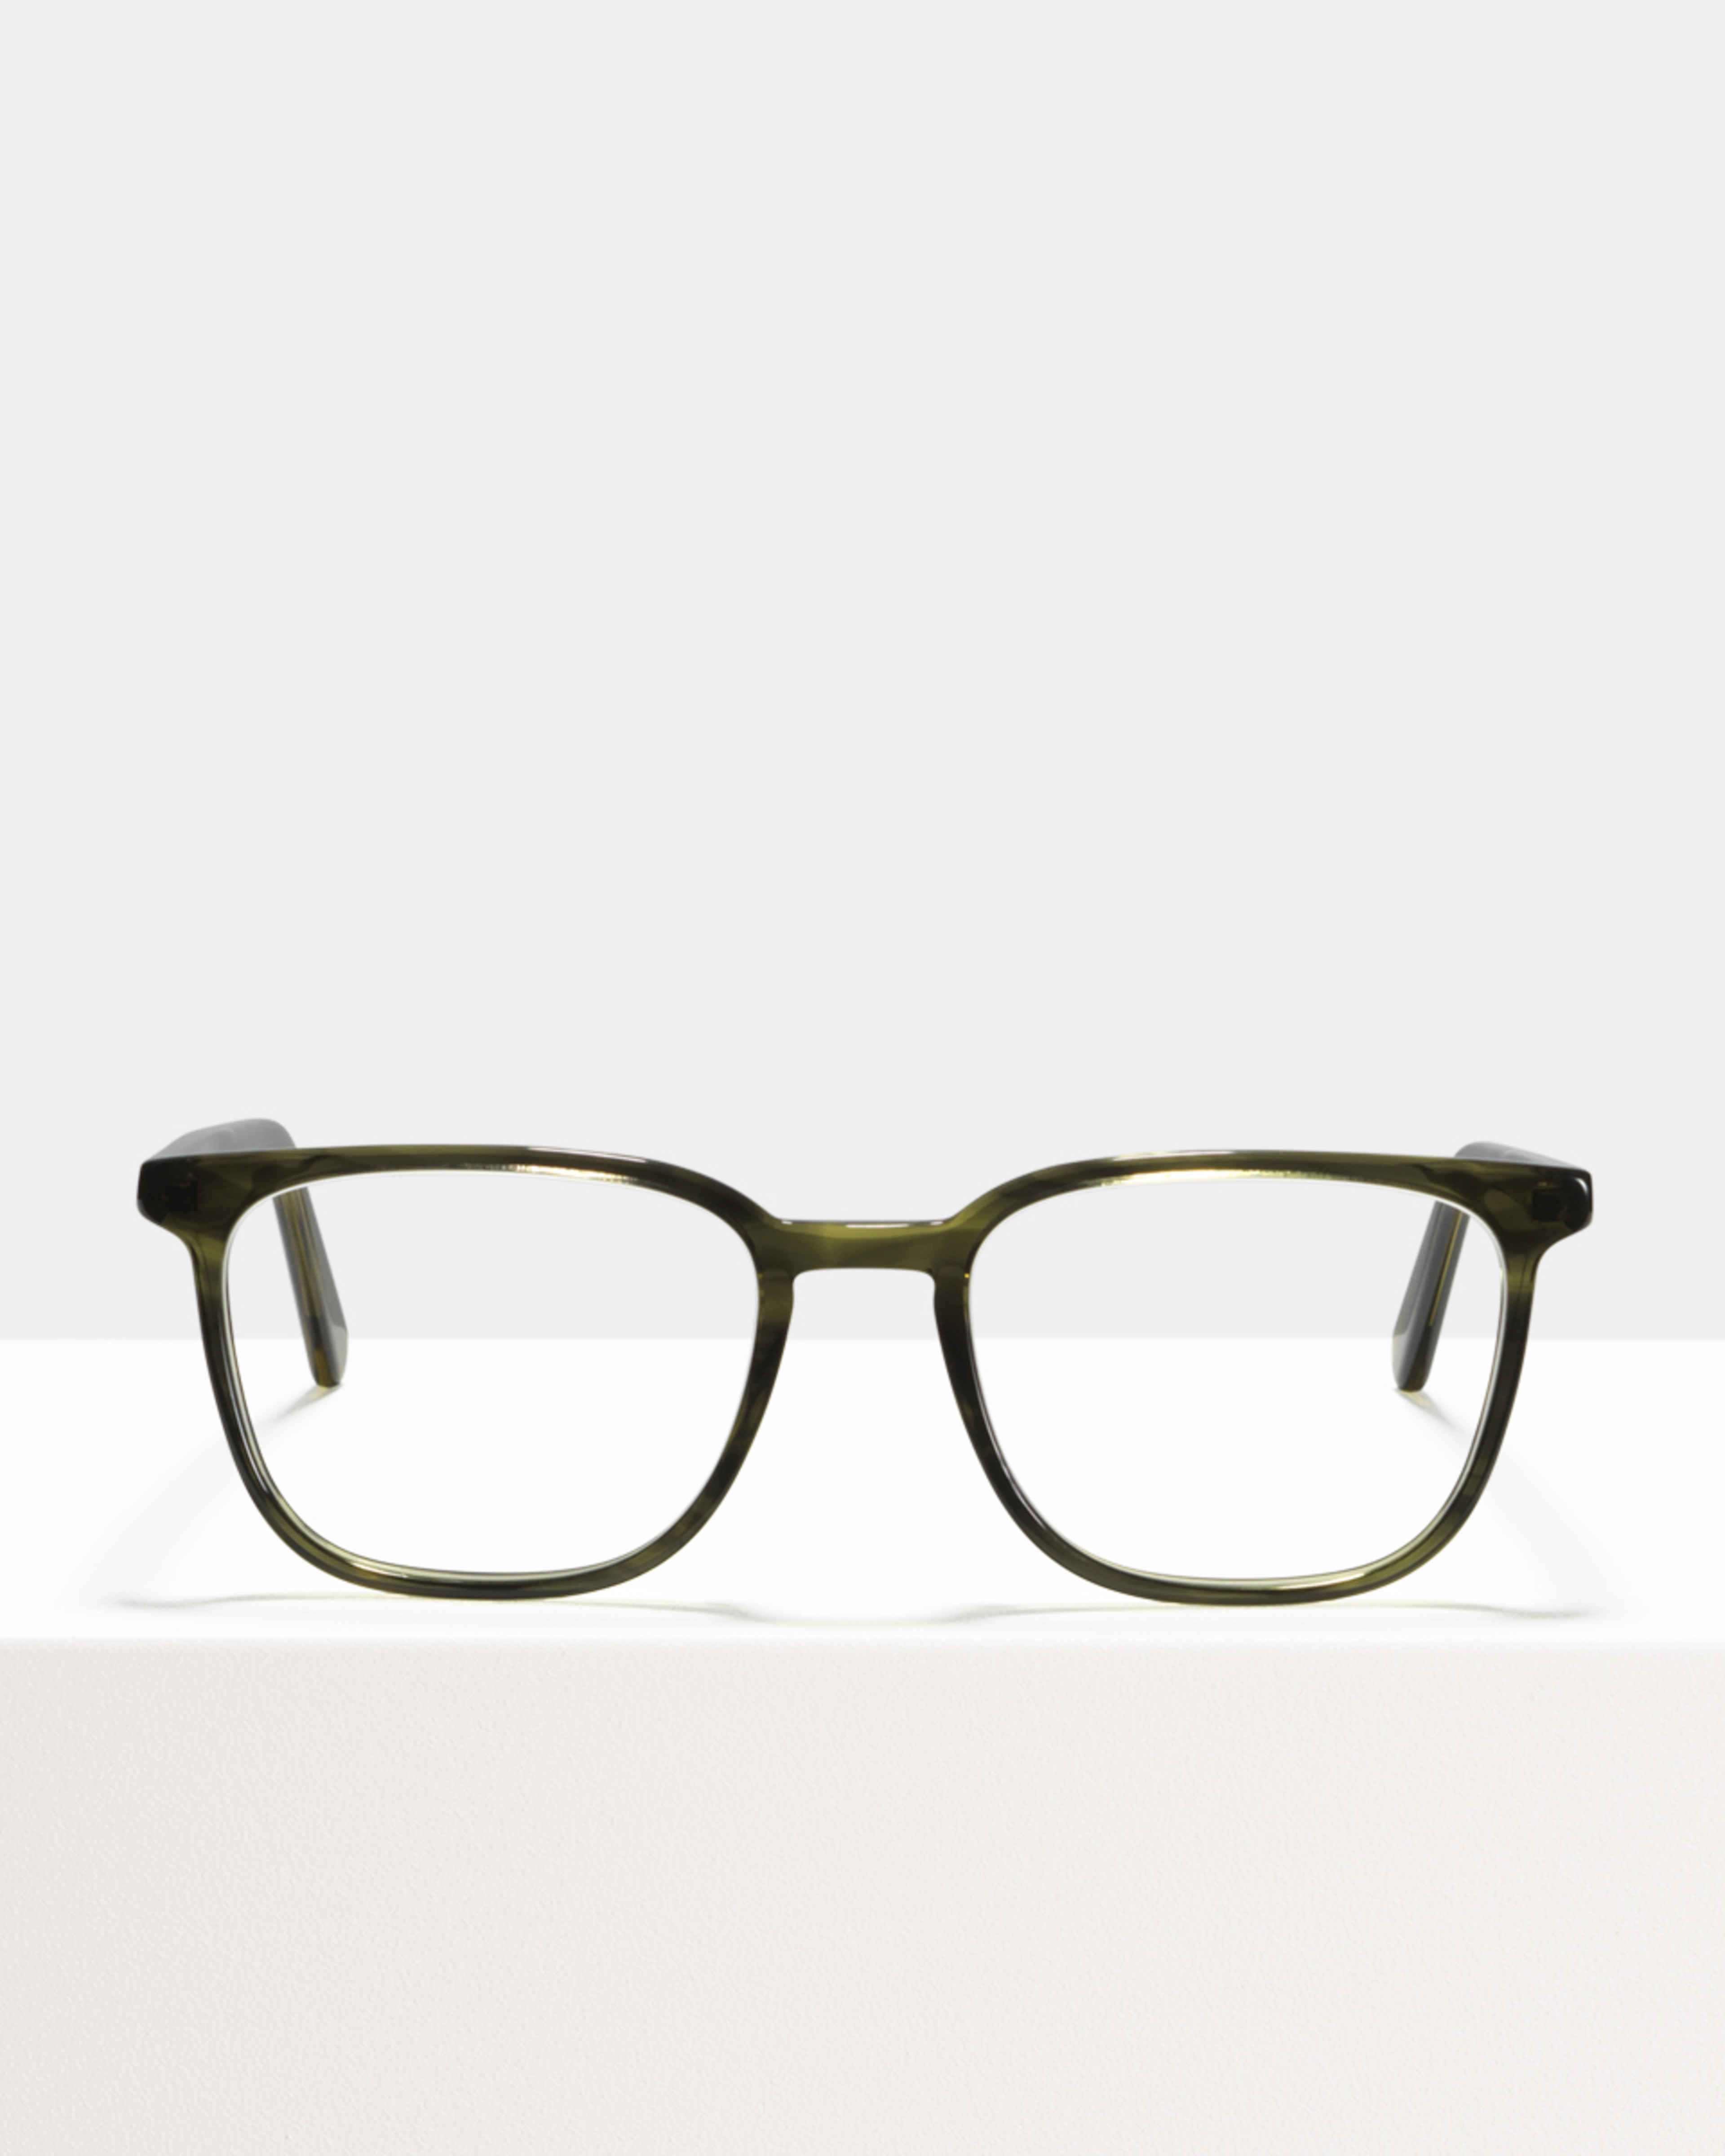 Ace & Tate Glasses | rechteckig Acetat in Grün